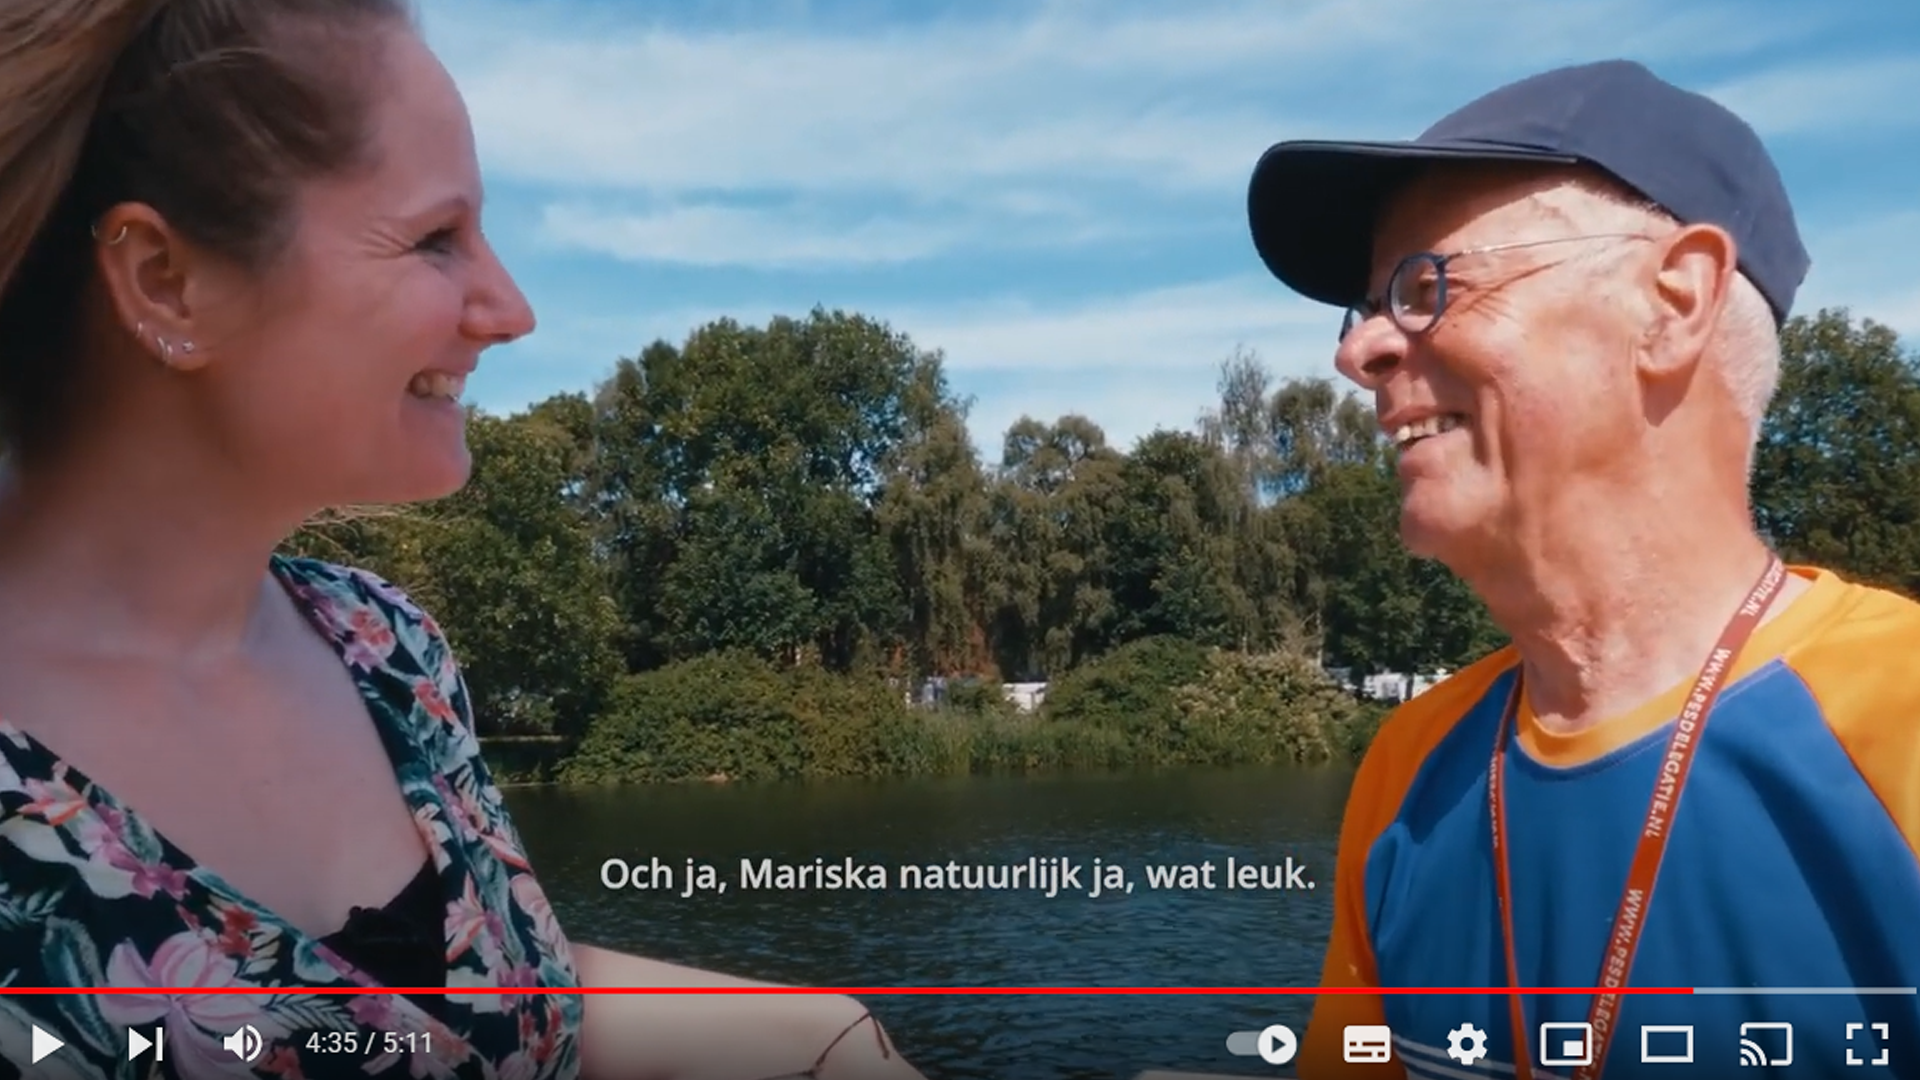 Bedankvideo van Mariska en vroegere leraar